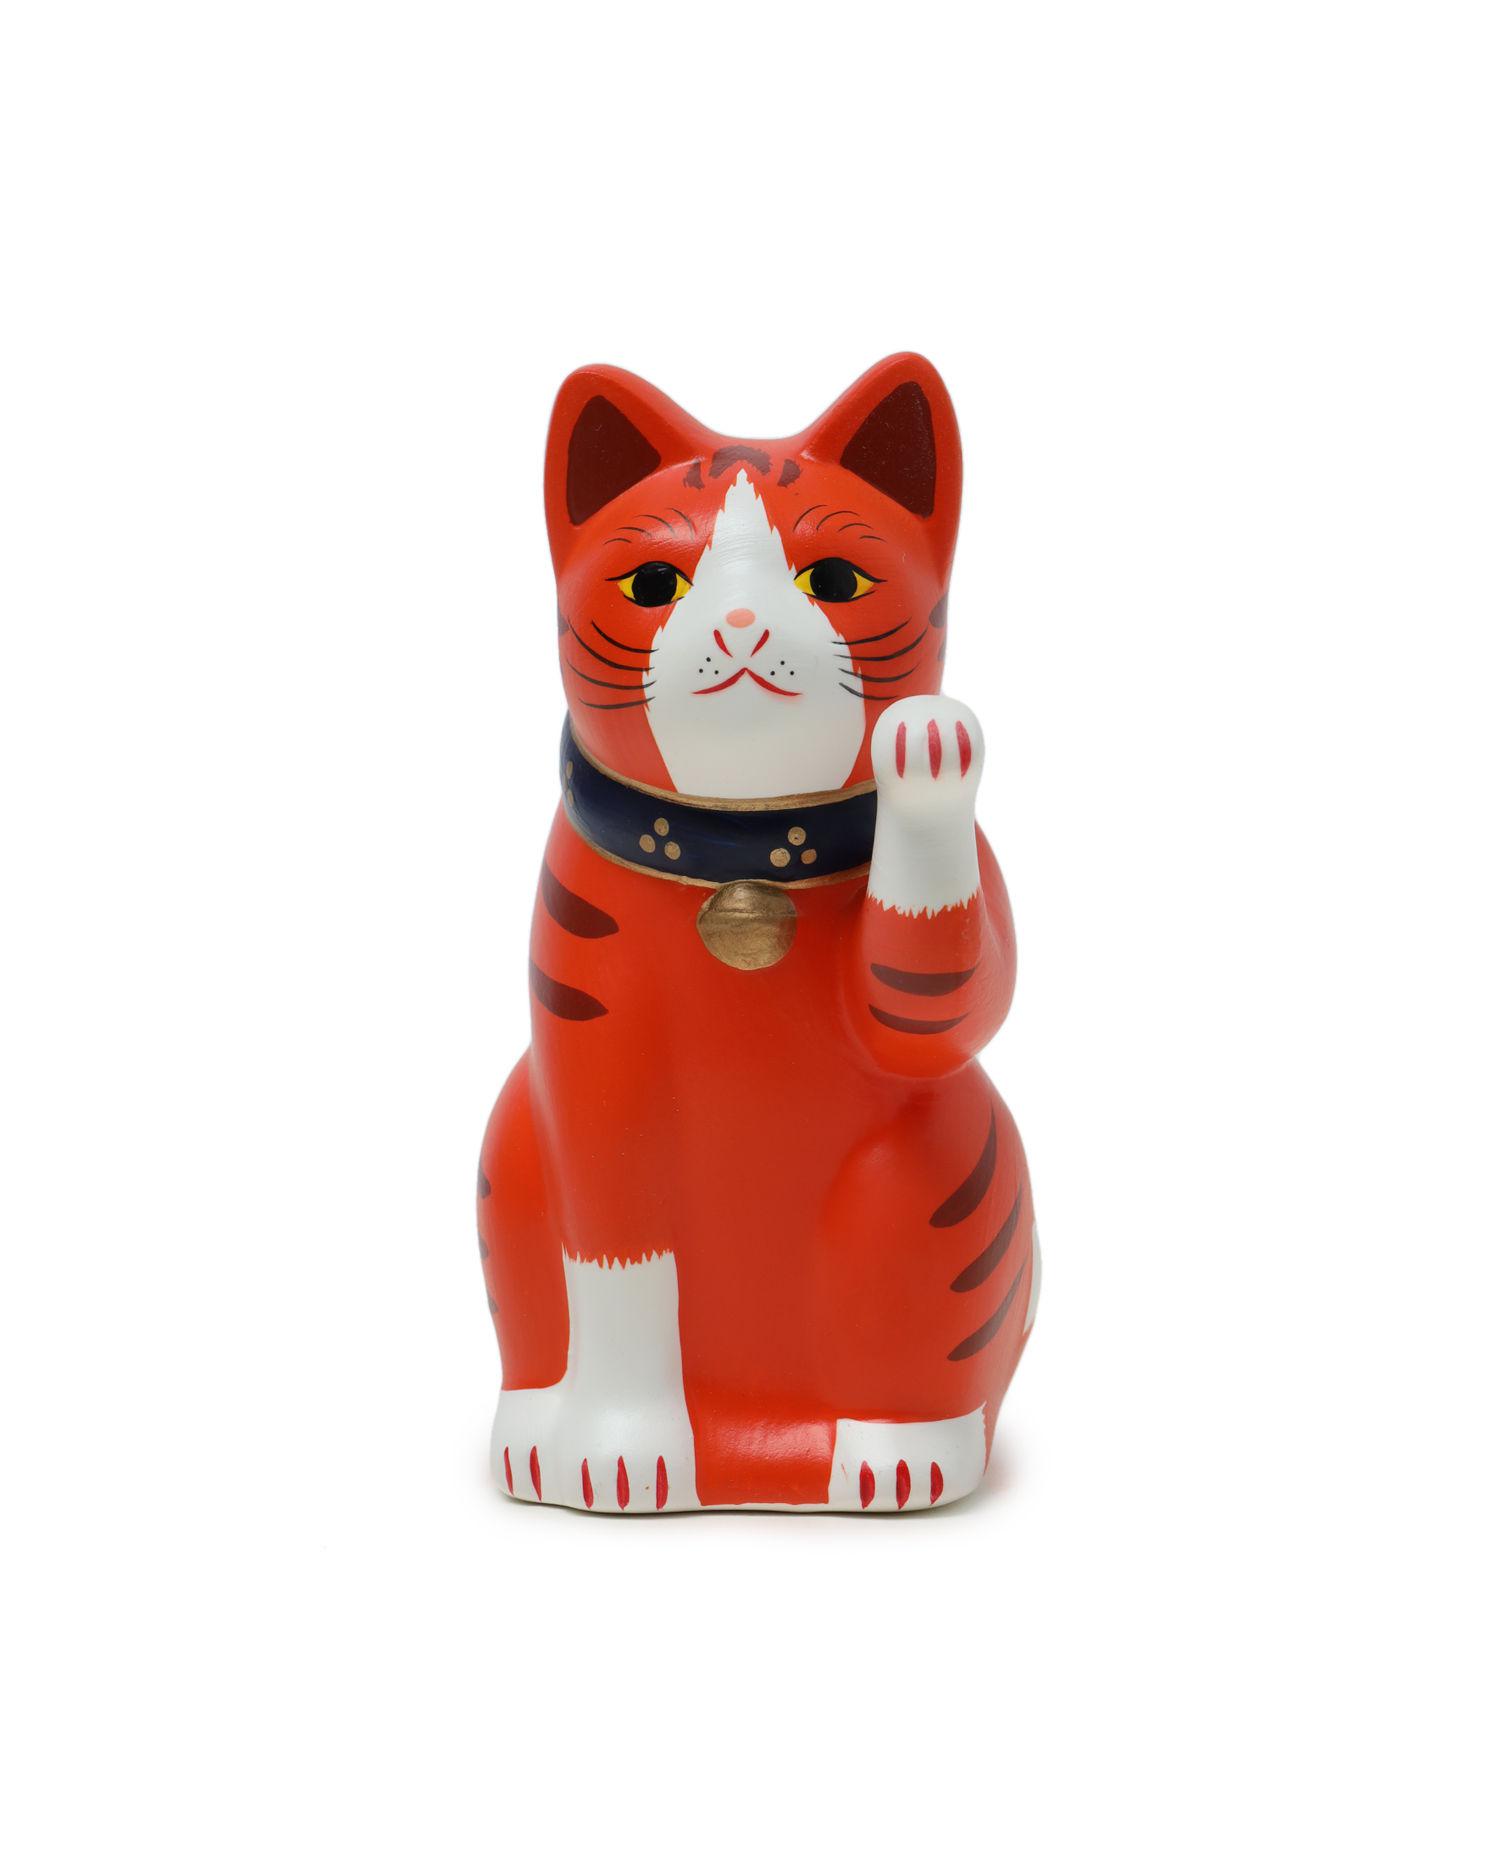 X Chugai toen fortune cat figure by BEAMS JAPAN